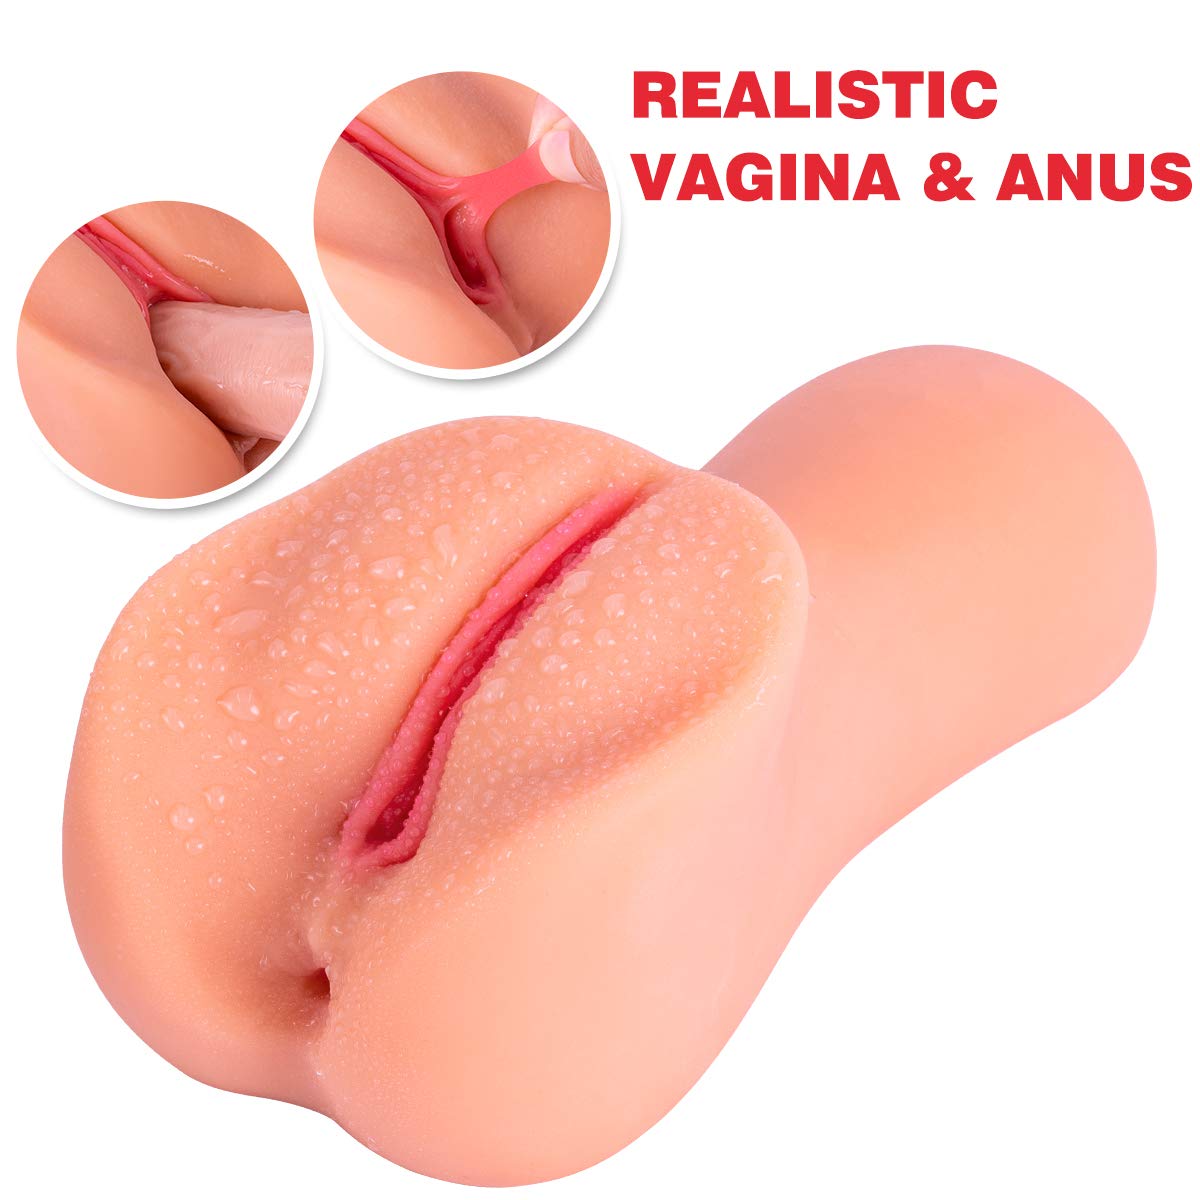 Virgin vagina look a like